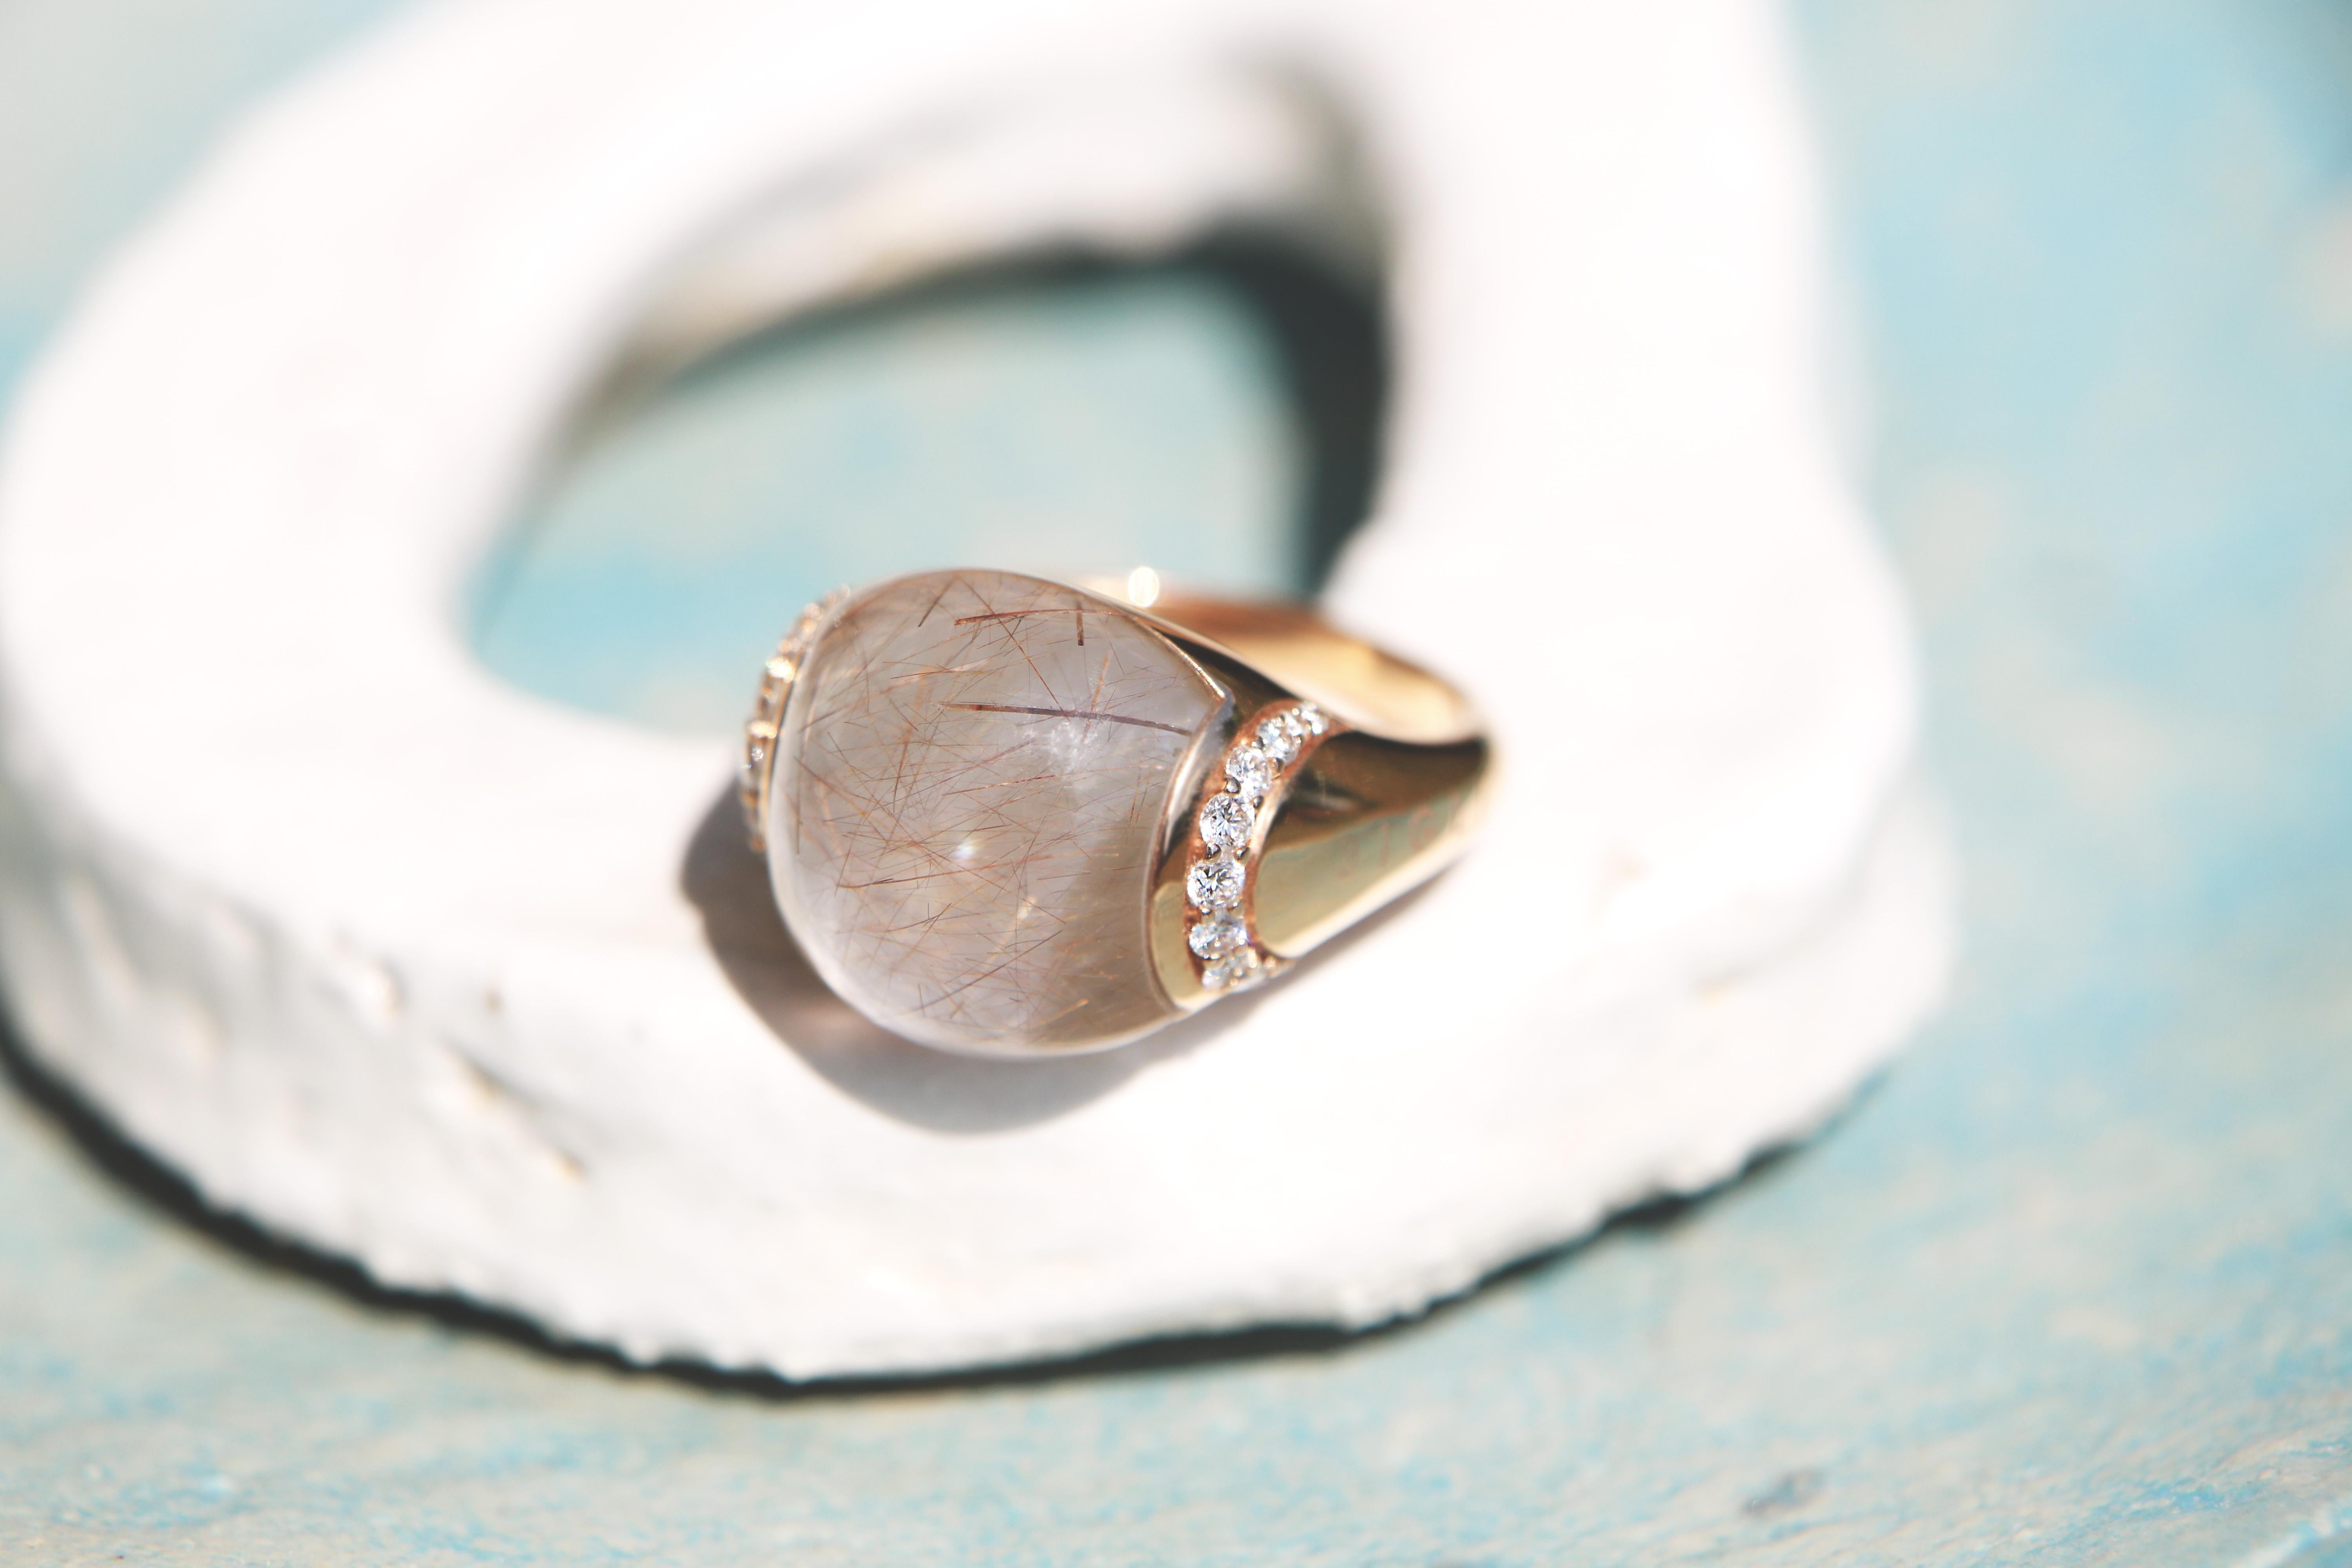 Cabochon Rutile Quartz Ring in 18ct Rose Gold by Bigli For Sale